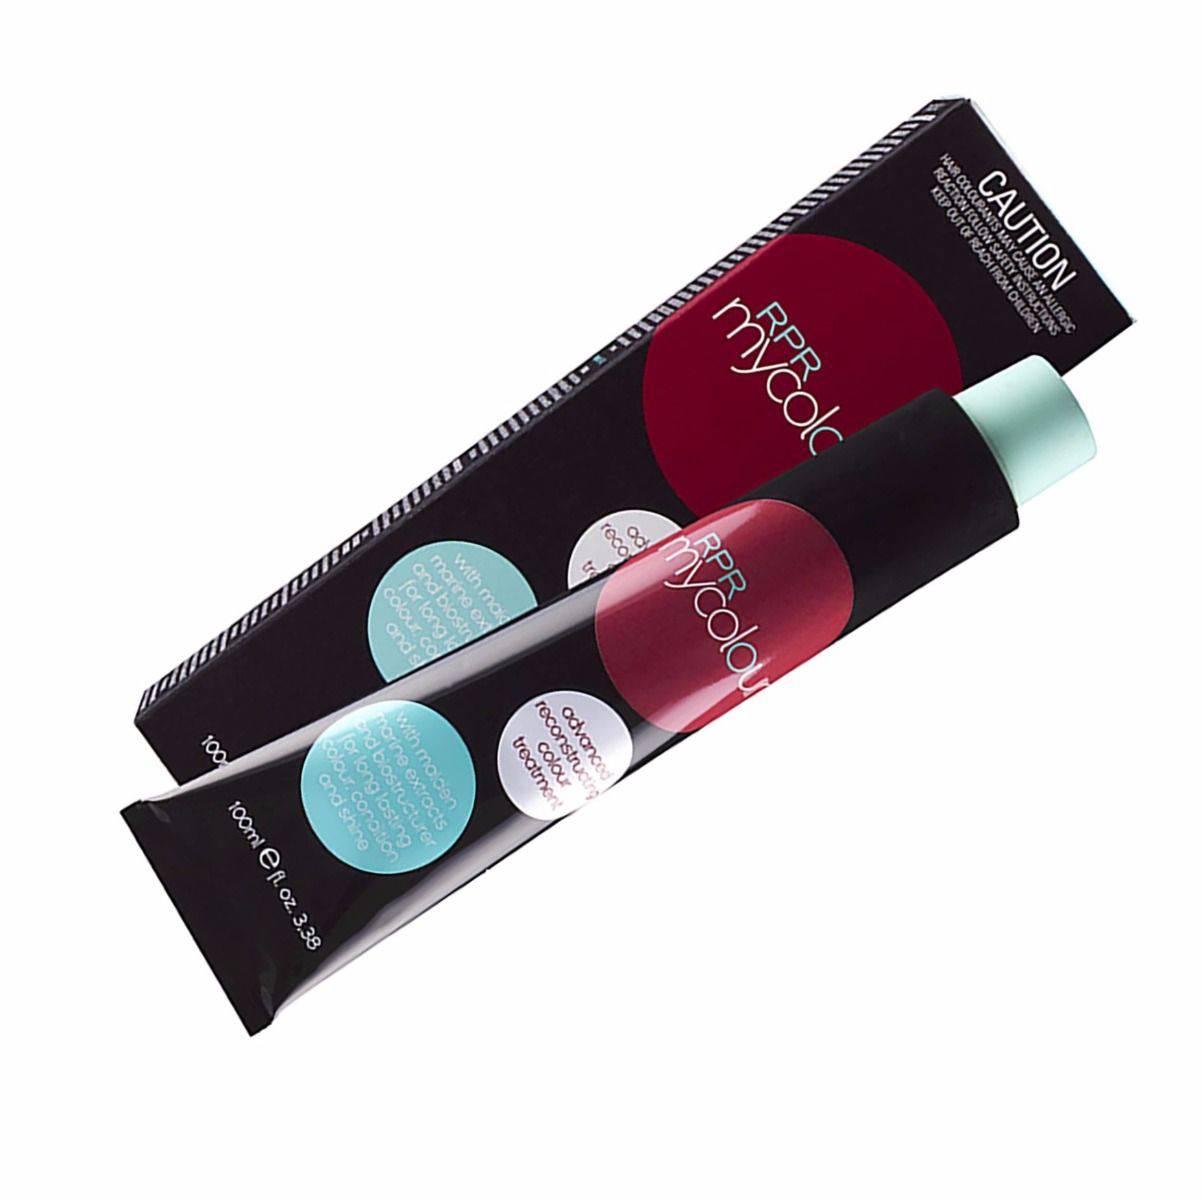 RPR My Colour 12.226 Level 12 Intense Violet 100g tube Mix 1:1.5 My Colour - On Line Hair Depot